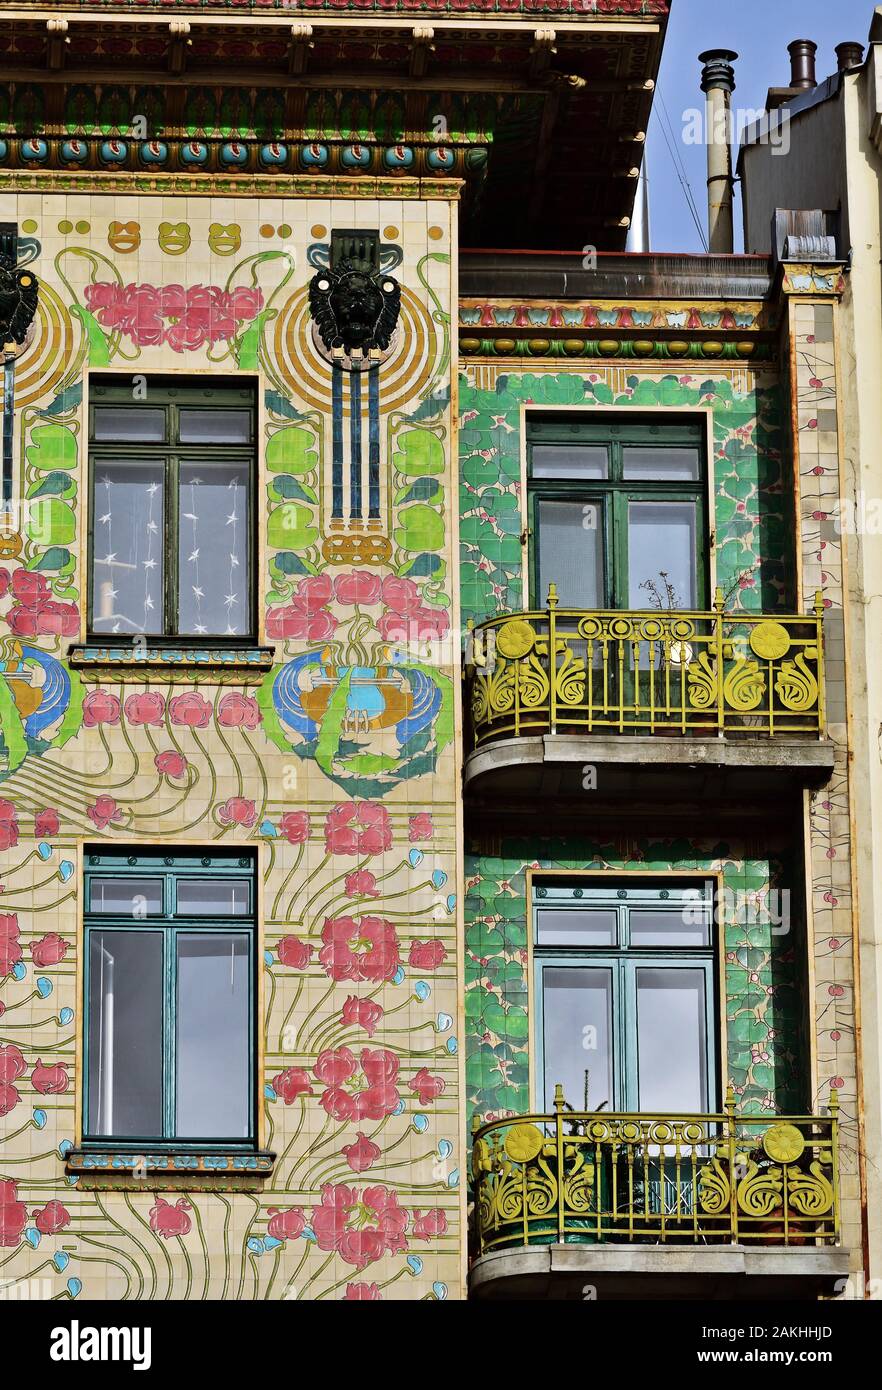 Iconic art nouveau building, Majolikahaus in Vienna, Austria Stock Photo